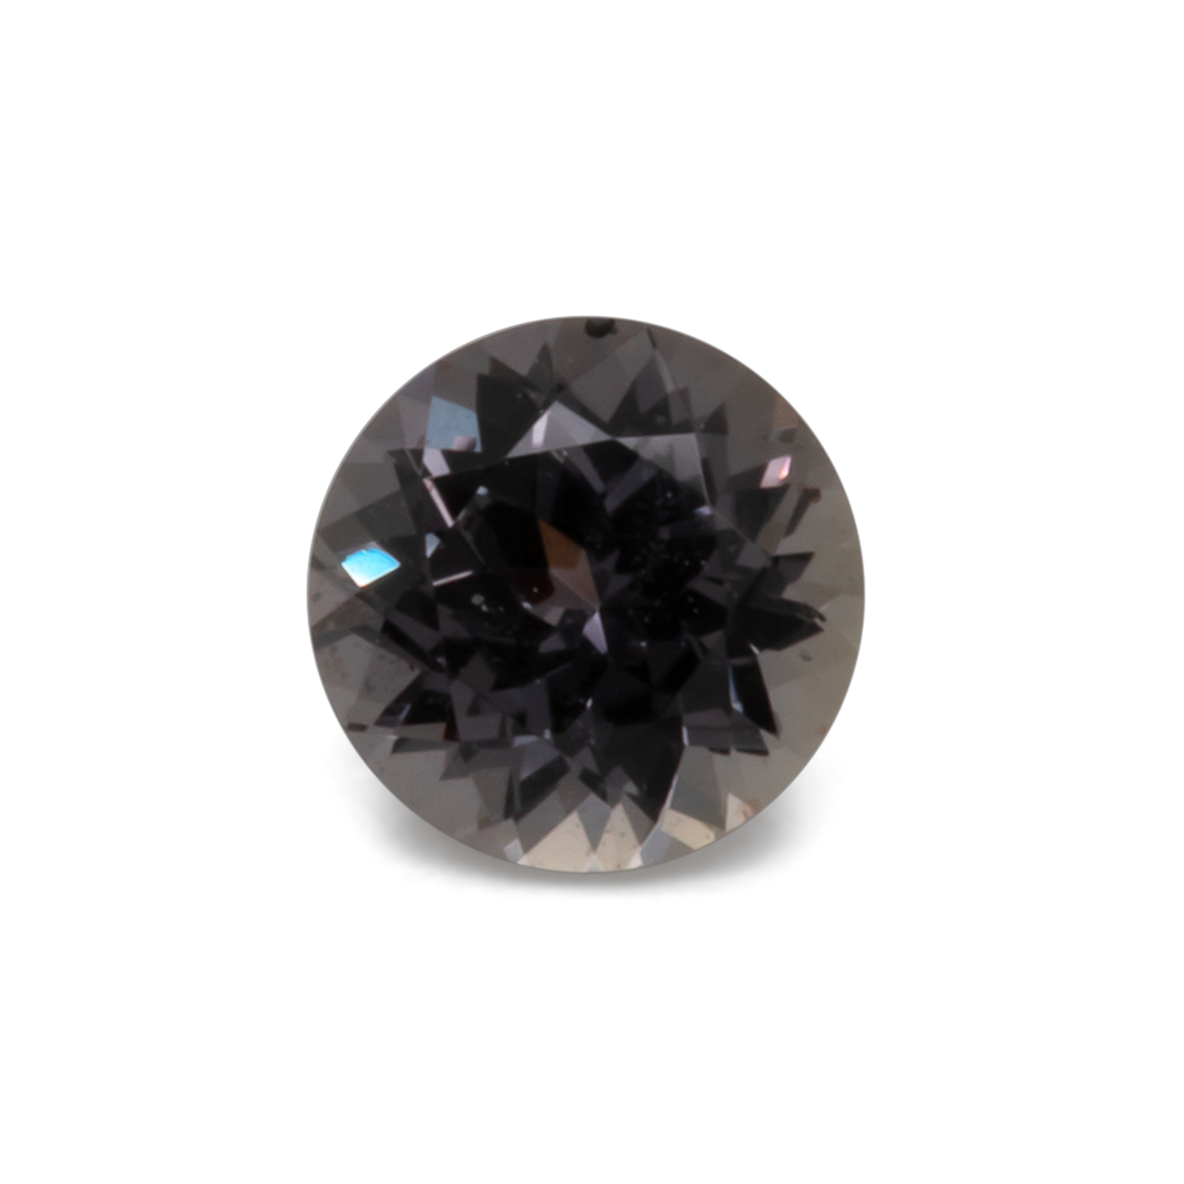 Sapphire - brown, round, 4x4 mm, 0.34 cts, No. XSR11220